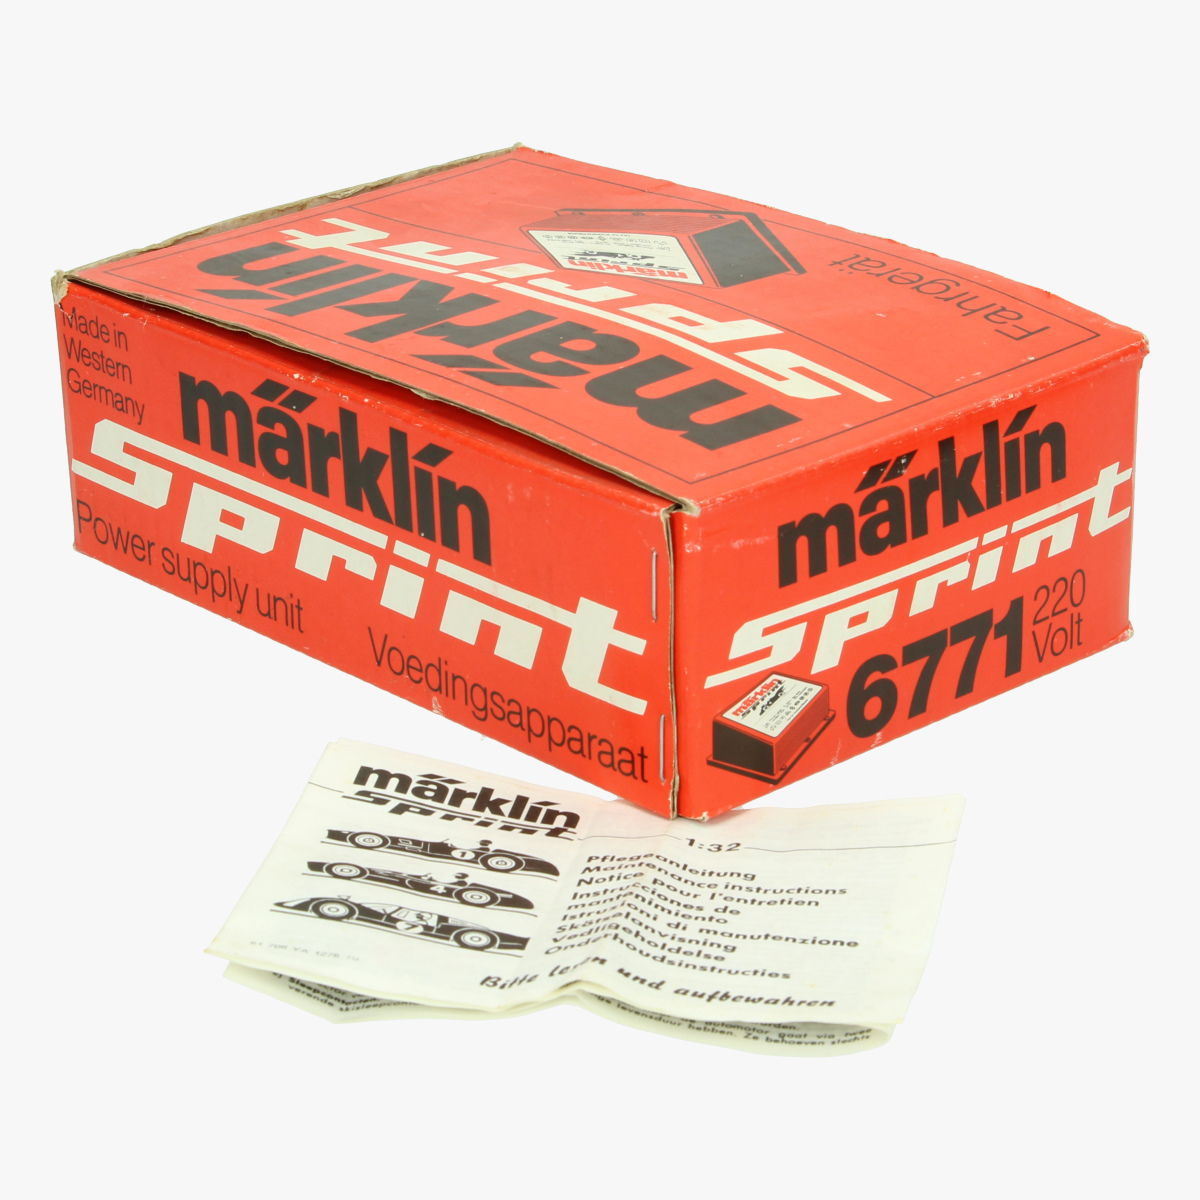 Afbeeldingen van Marklin Sprint. Transformator.Nr.6771.